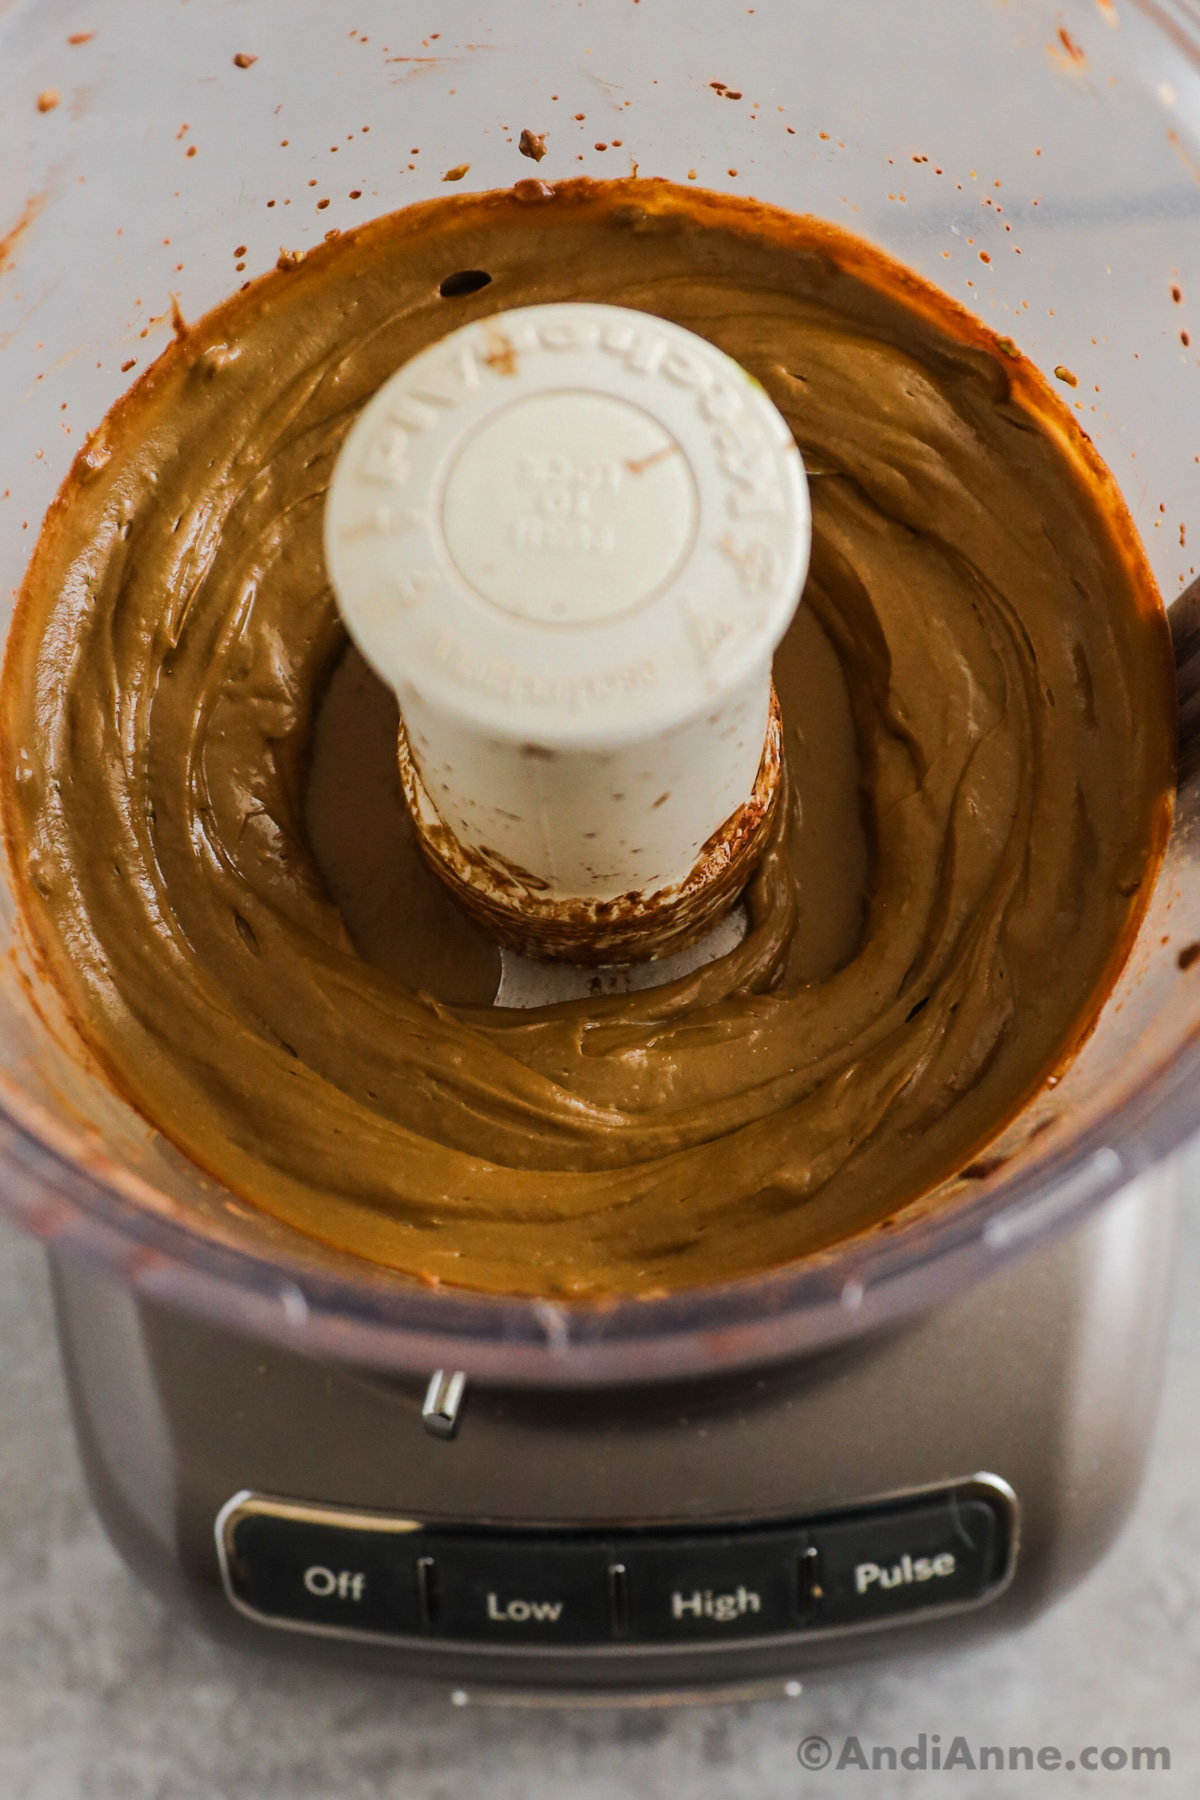 A food processor with smooth creamy chocolate avocado pudding inside.